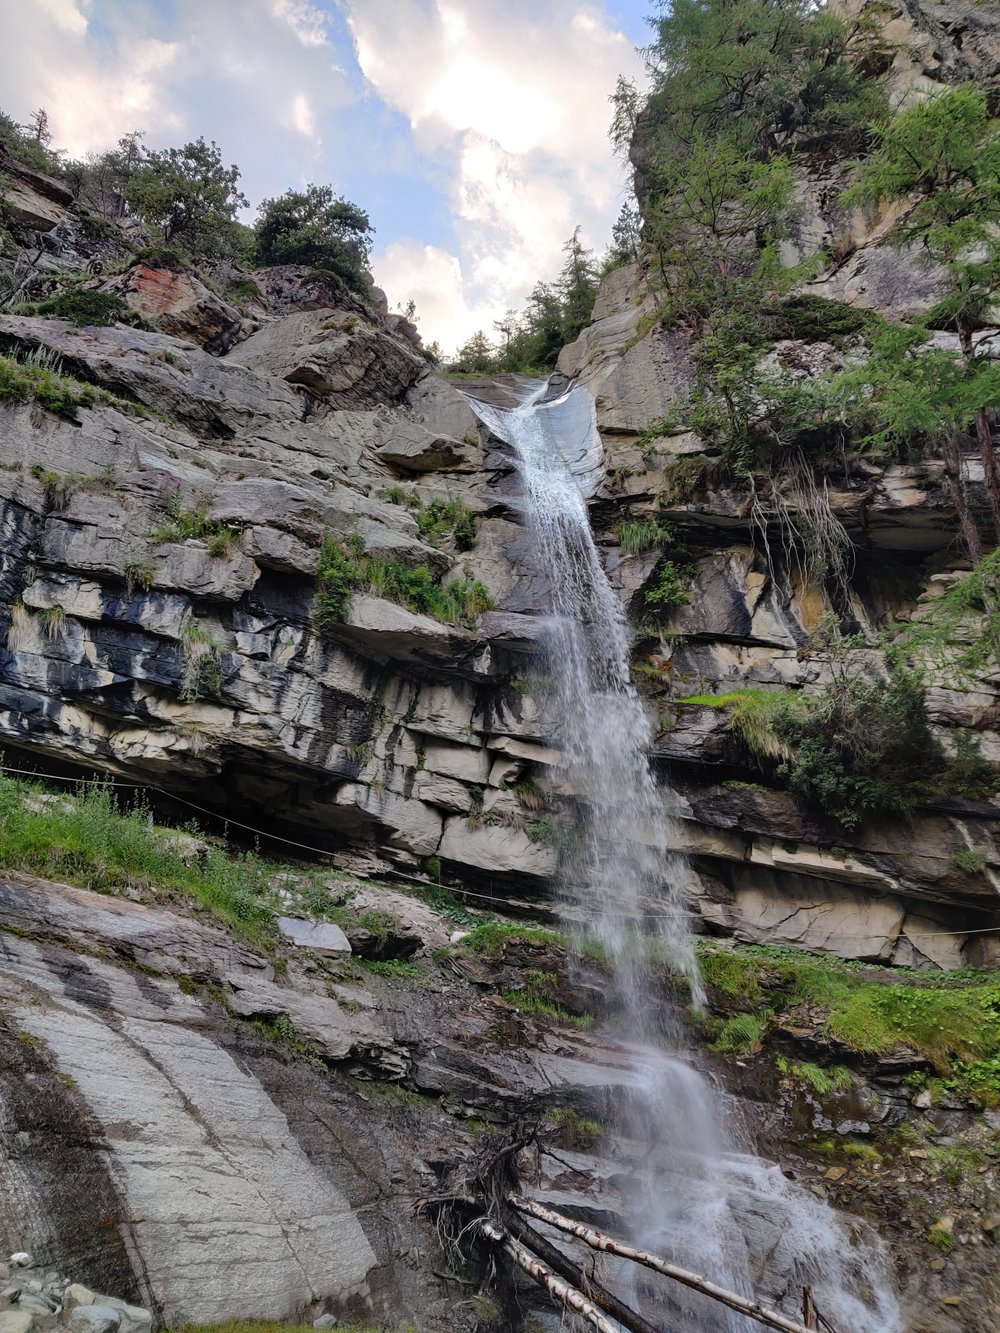 Europaweg trail behind waterfall